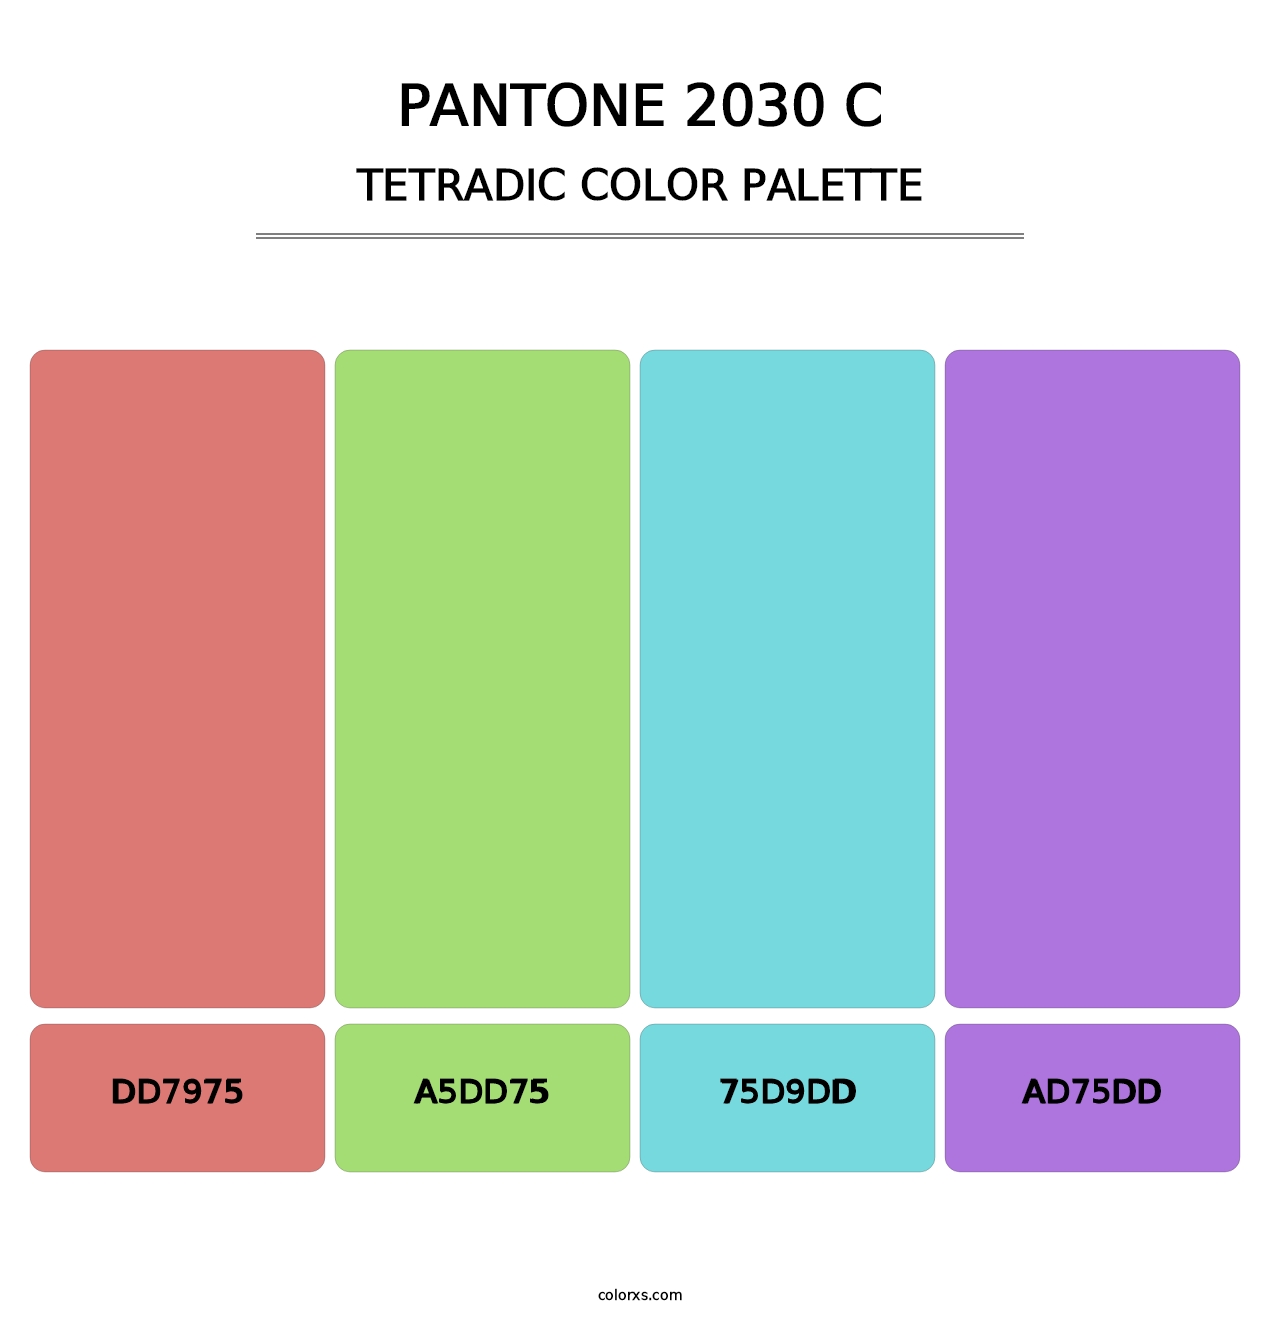 PANTONE 2030 C - Tetradic Color Palette